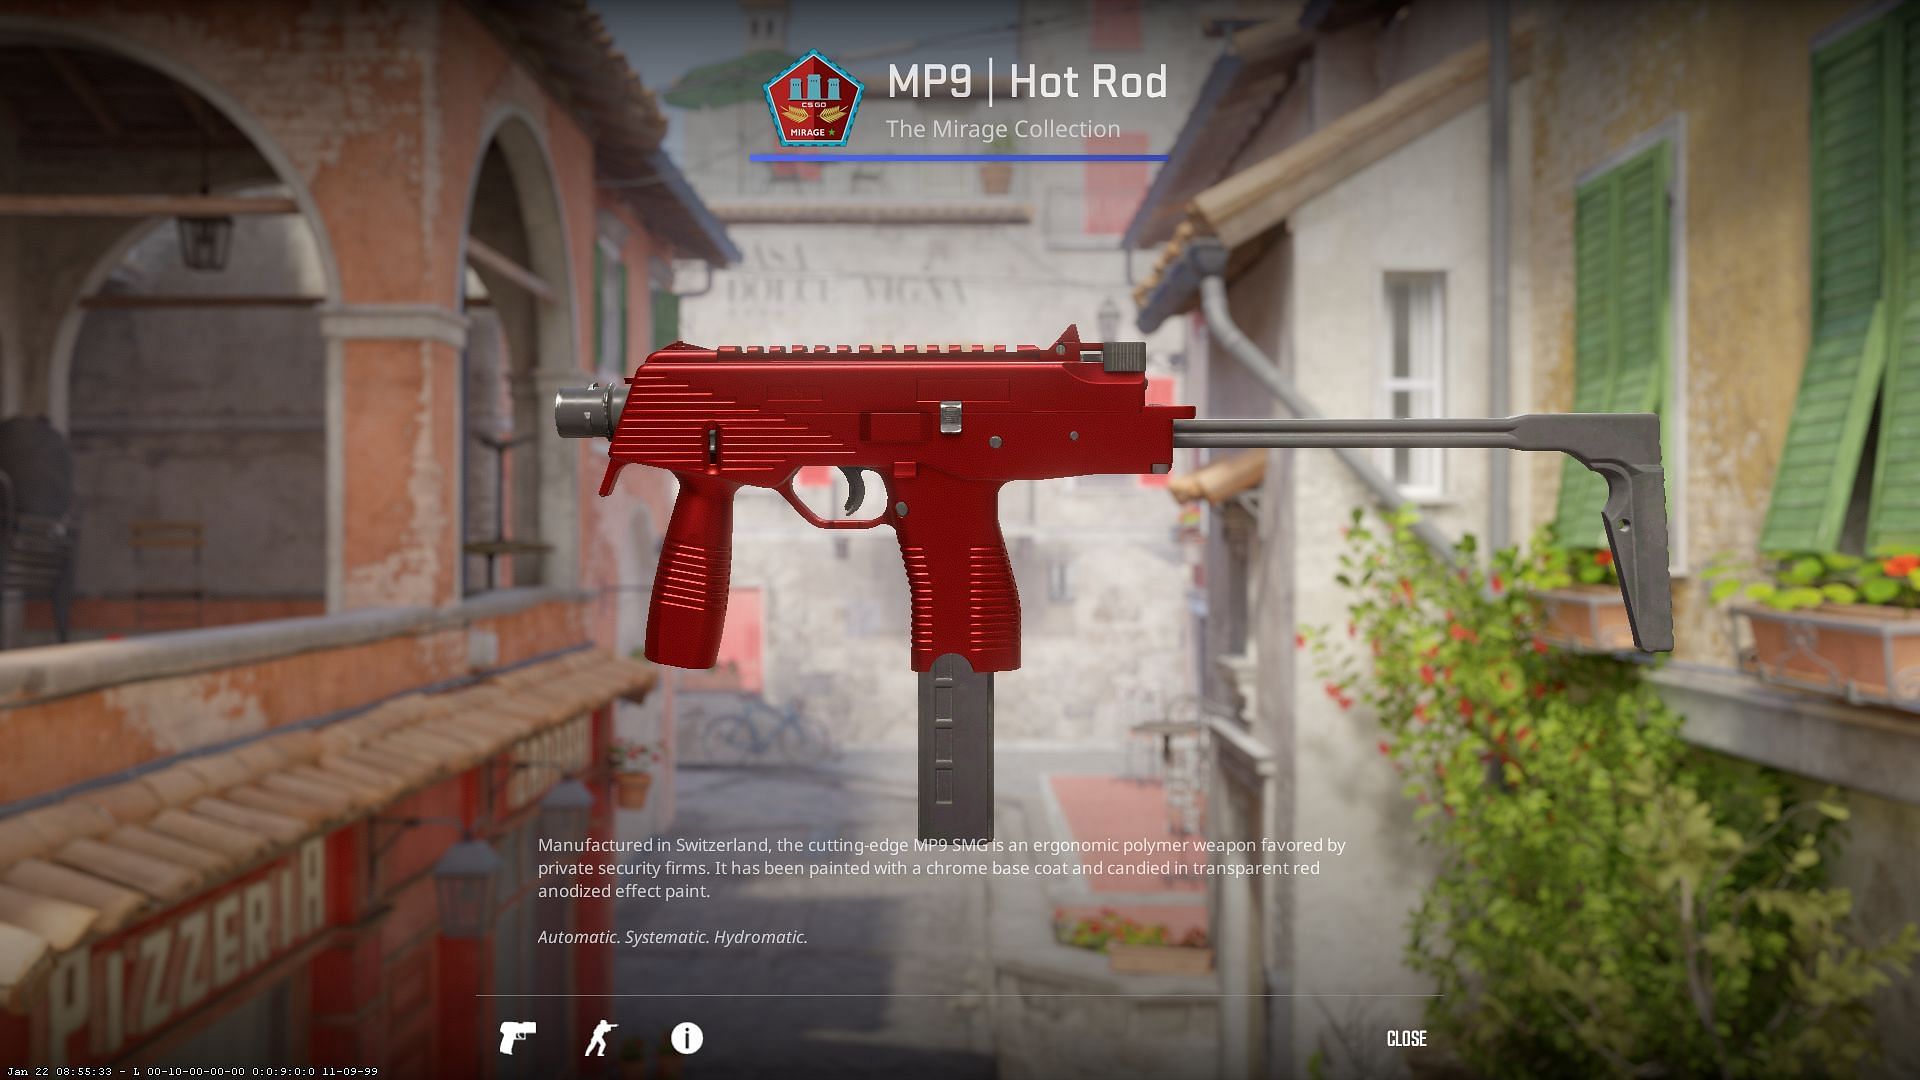 MP9 Hot Rod (Image via Valve)